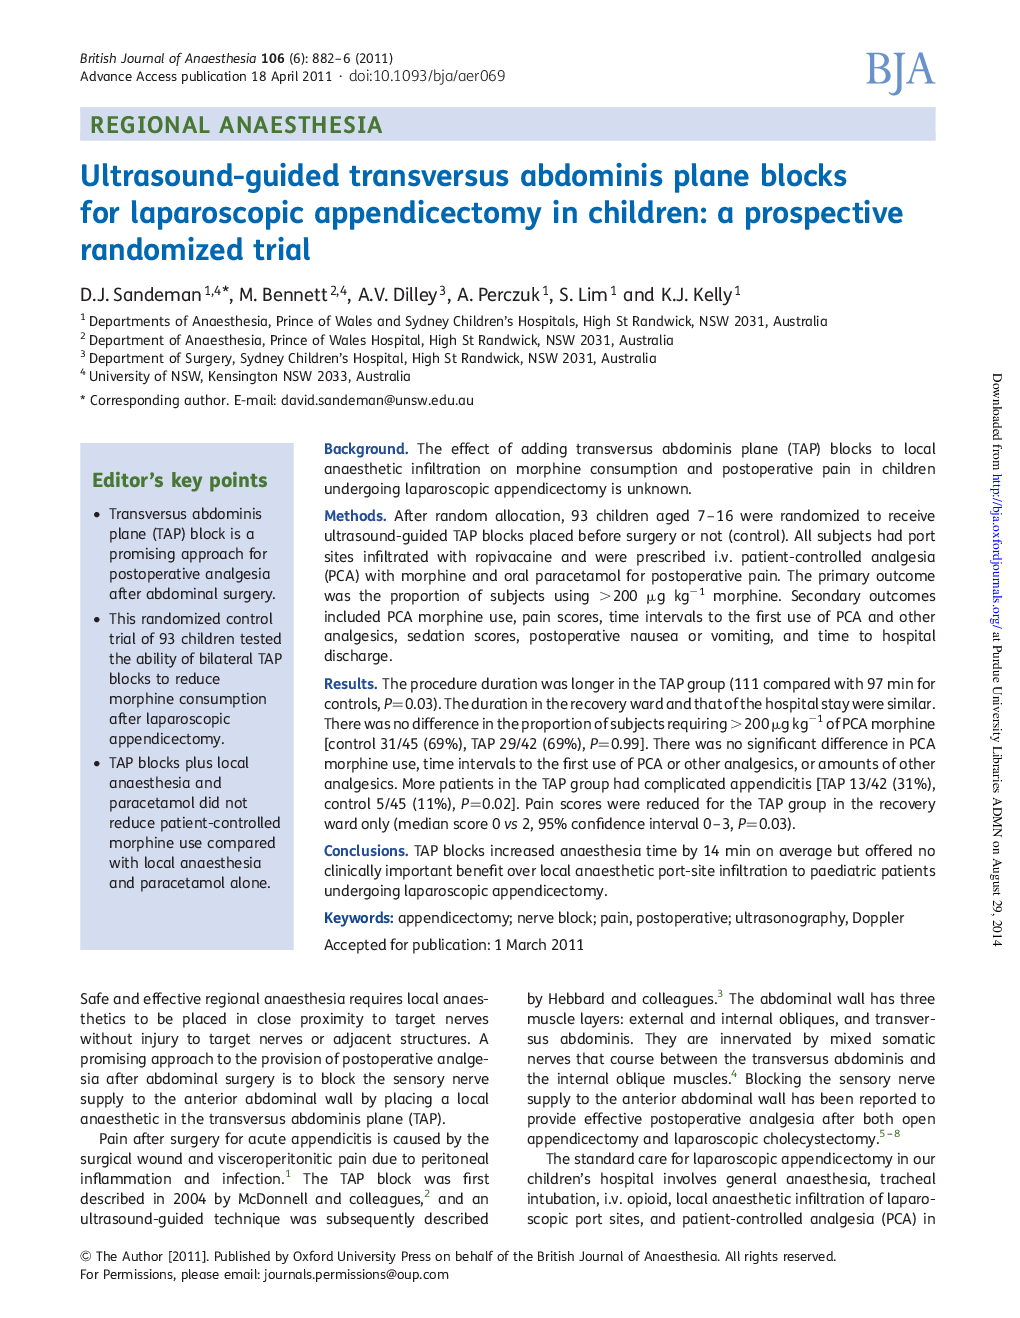 Ultrasound-guided transversus abdominis plane blocks for laparoscopic appendicectomy in children: a prospective randomized trial